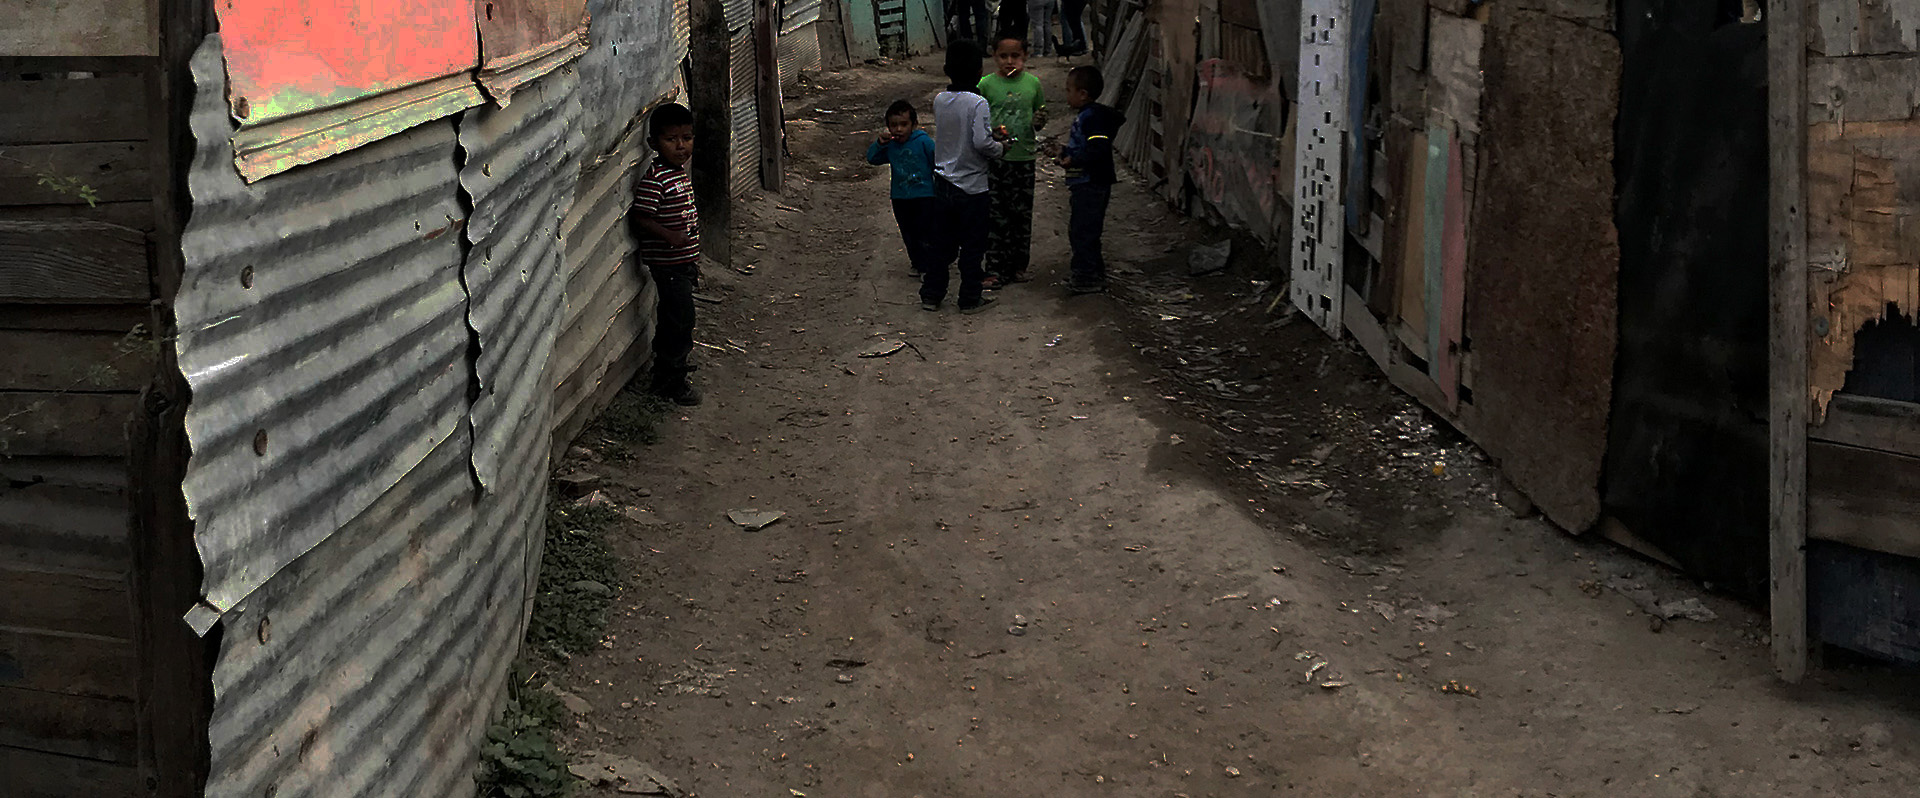 Boys in street between shacks